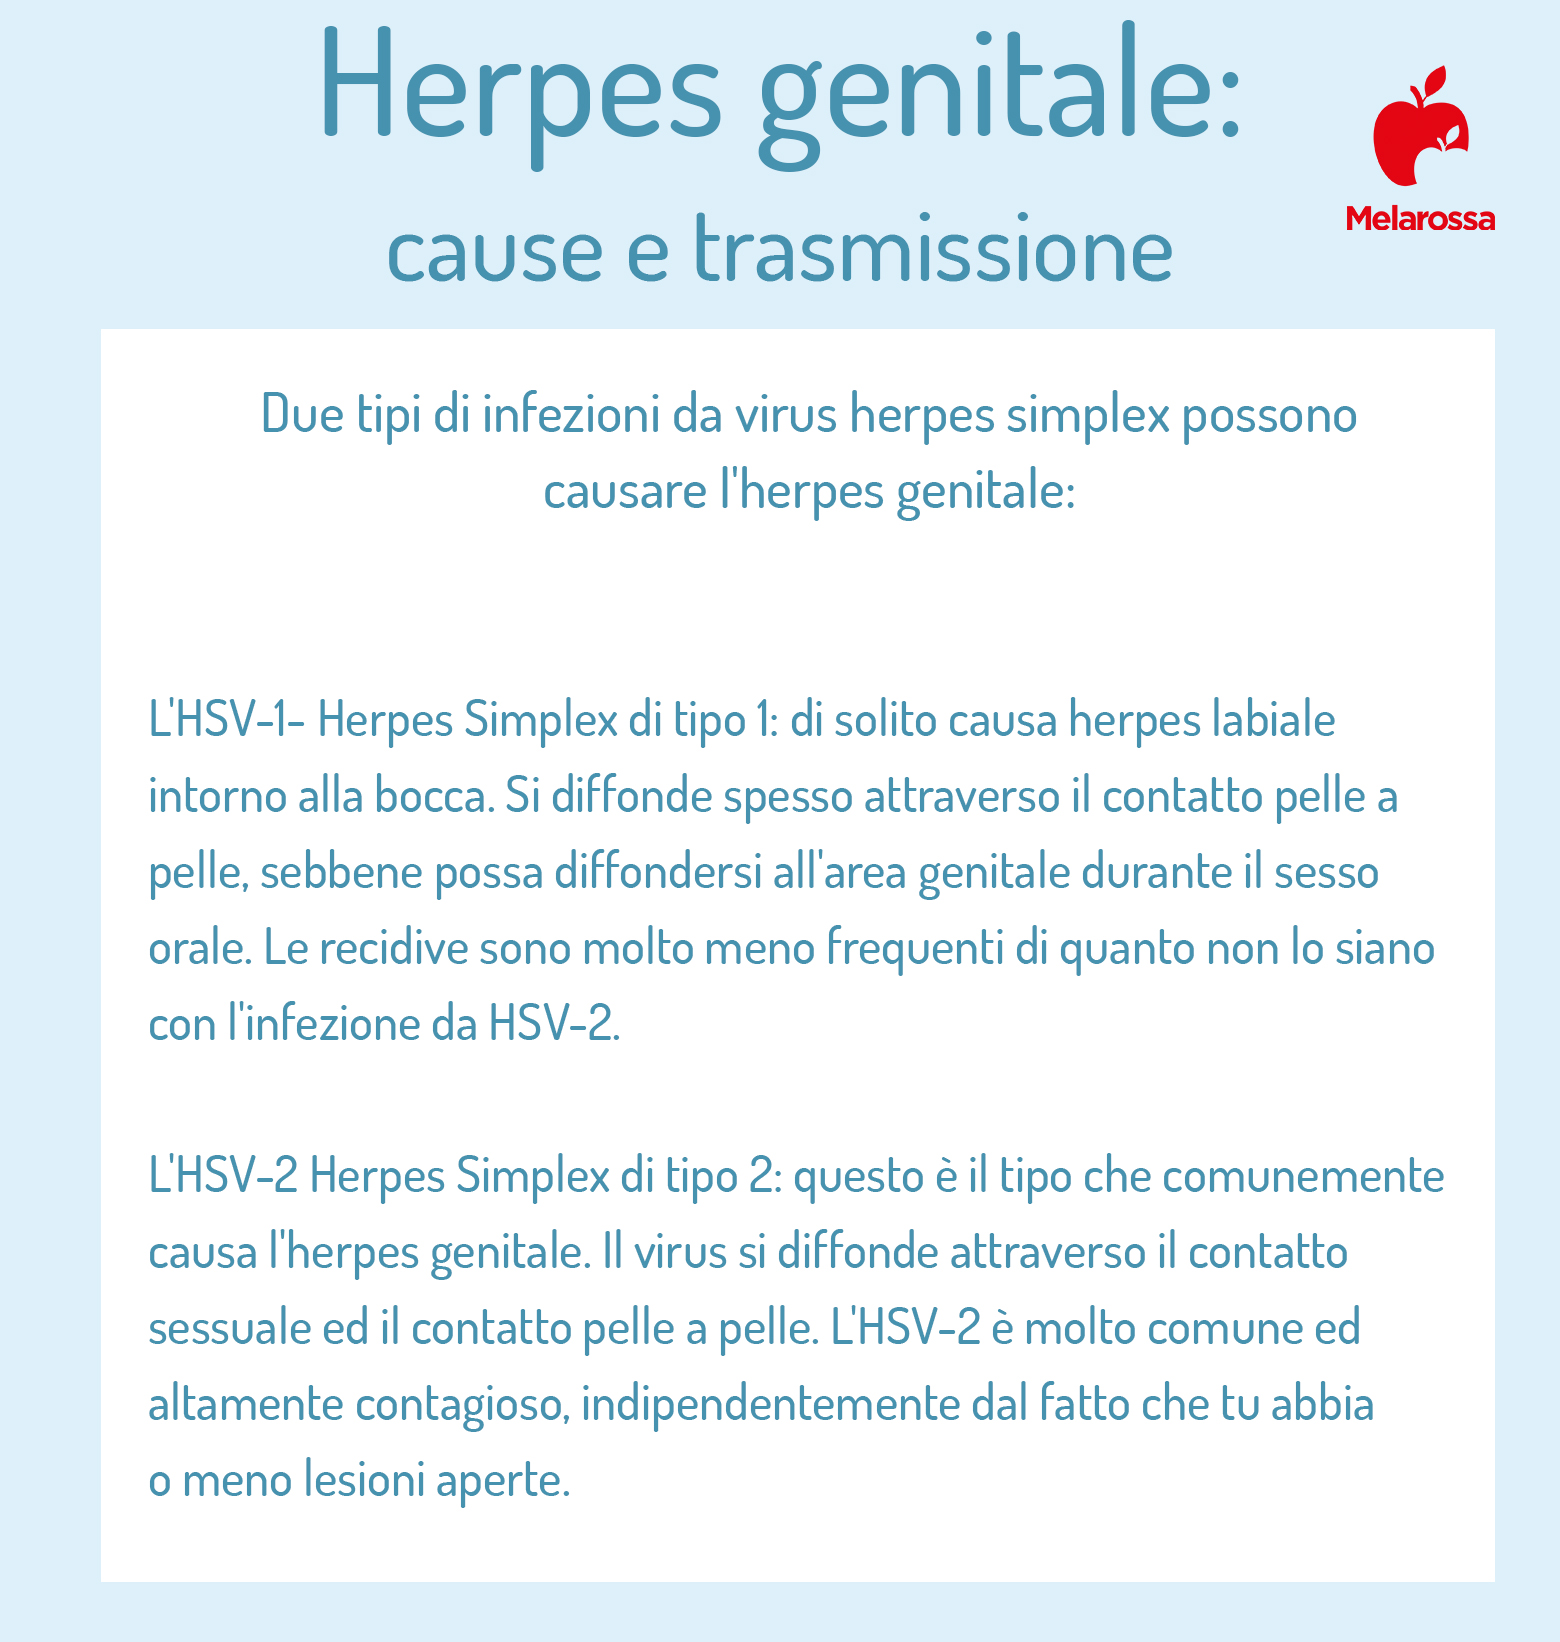 herpes genitale: cause e trasmissione 